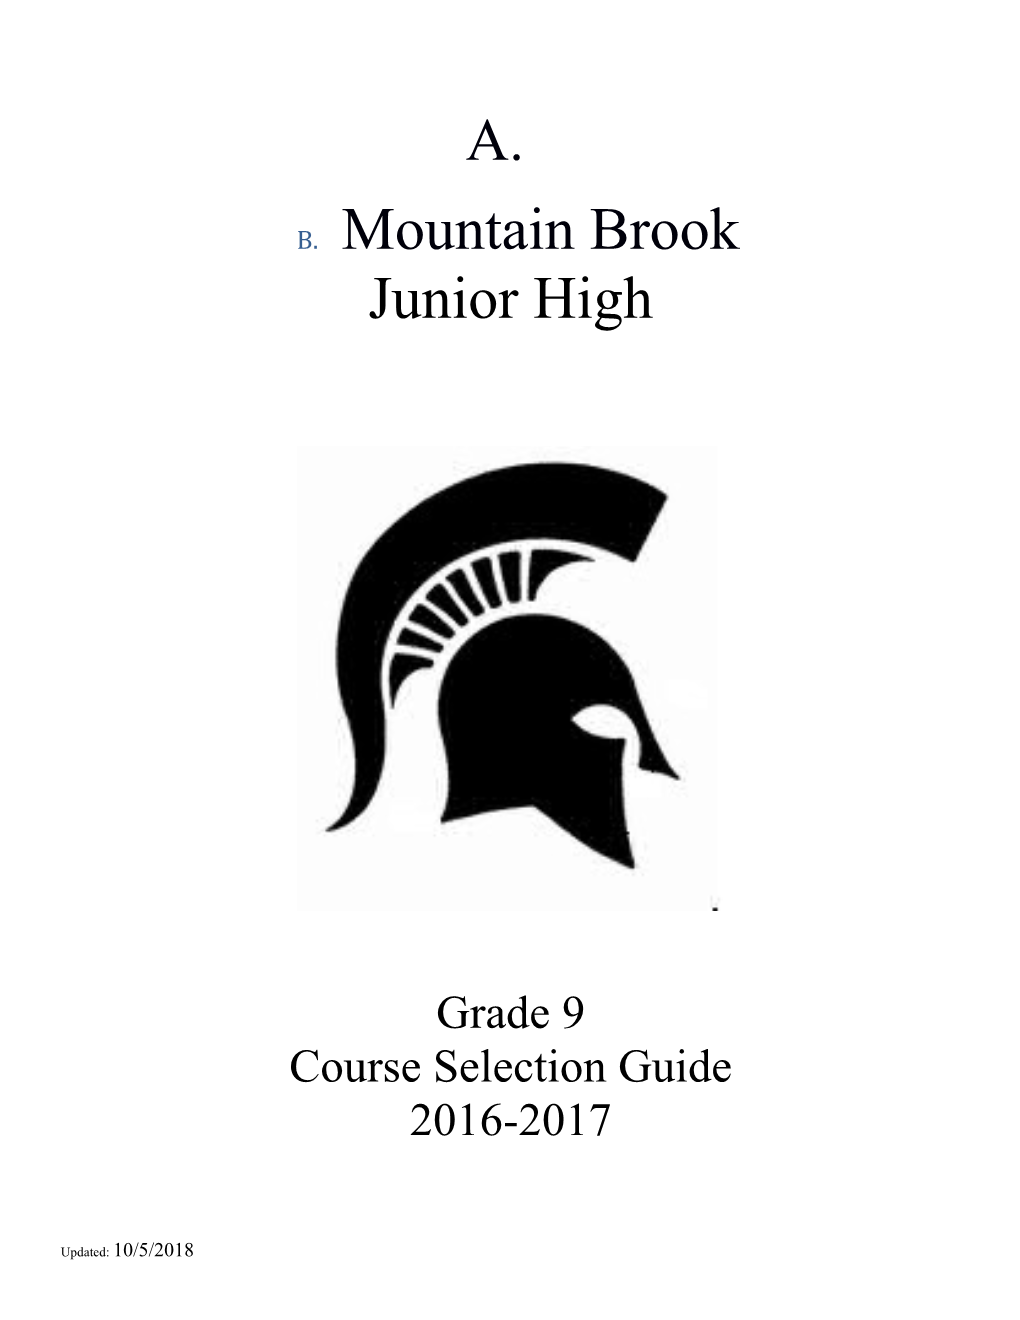 Mountain Brook Junior High